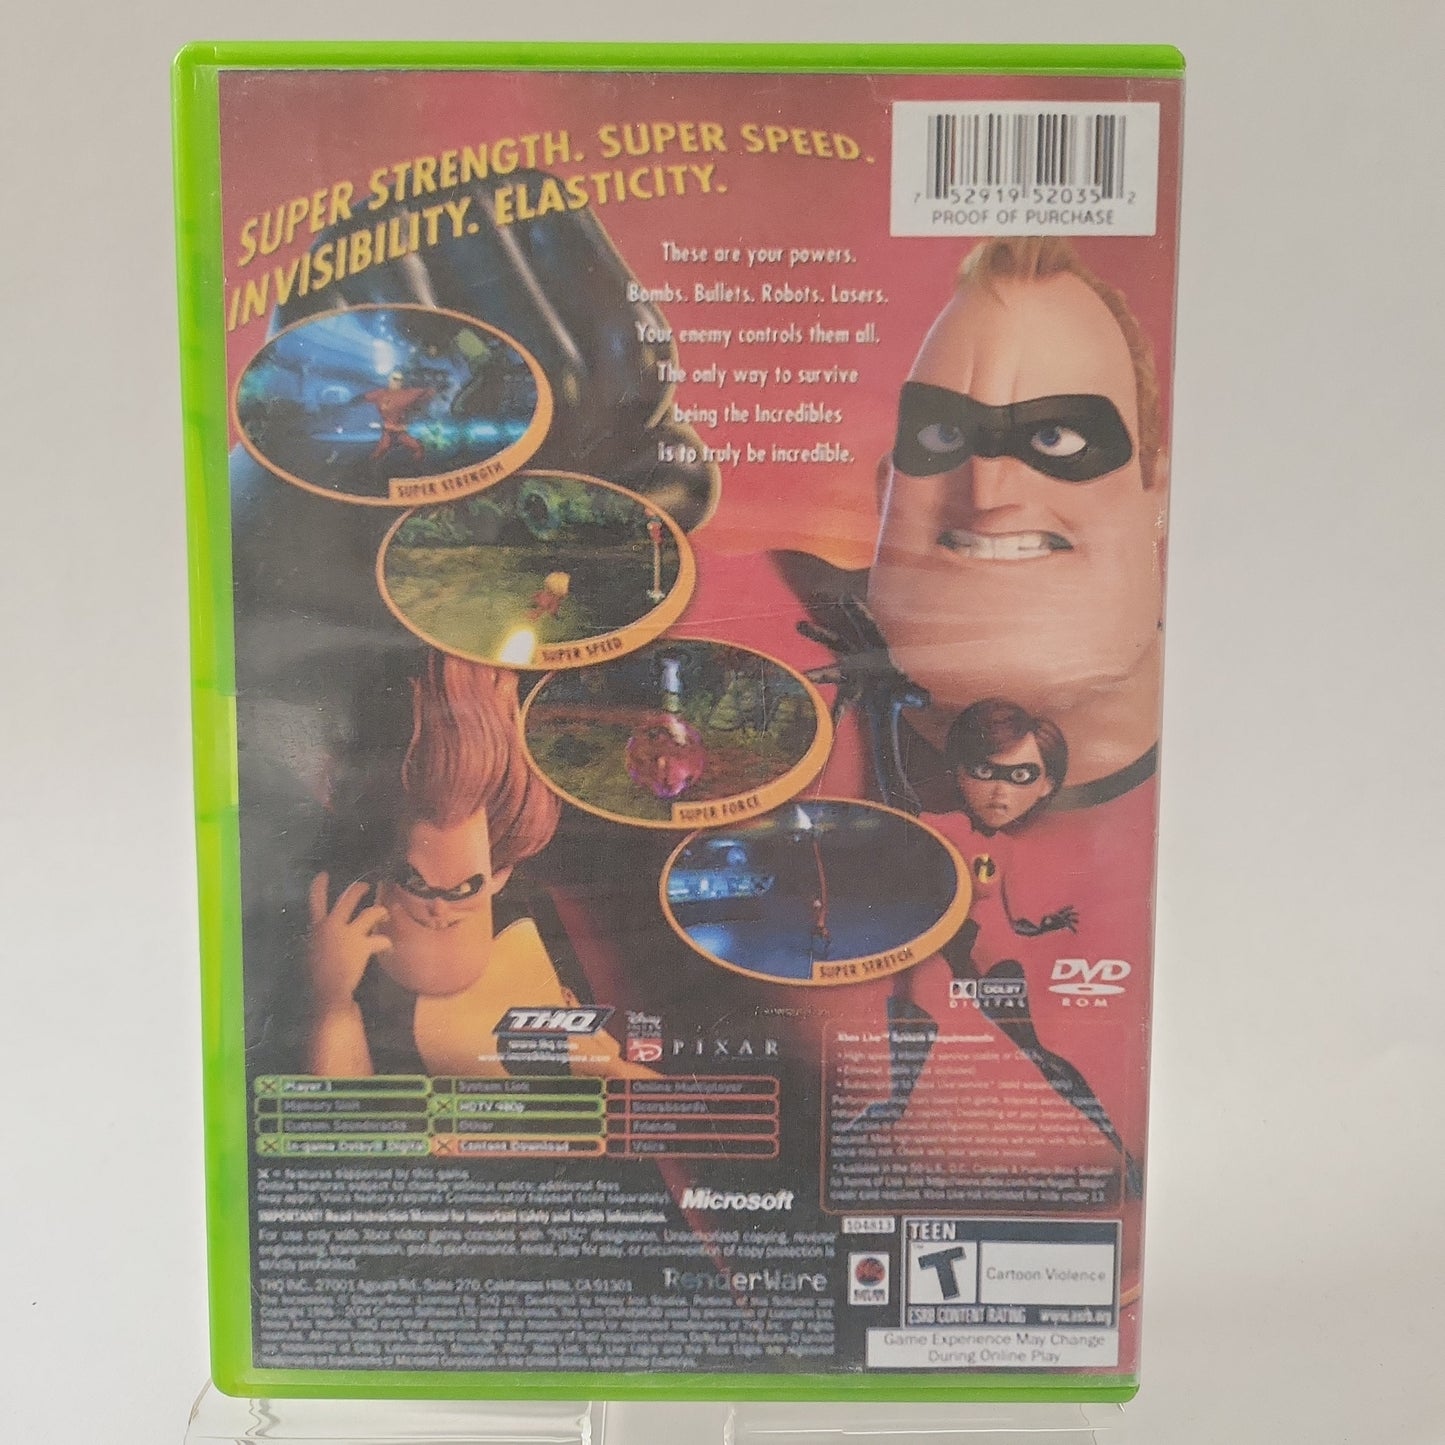 The Incredibles (Copy Cover) Xbox Original